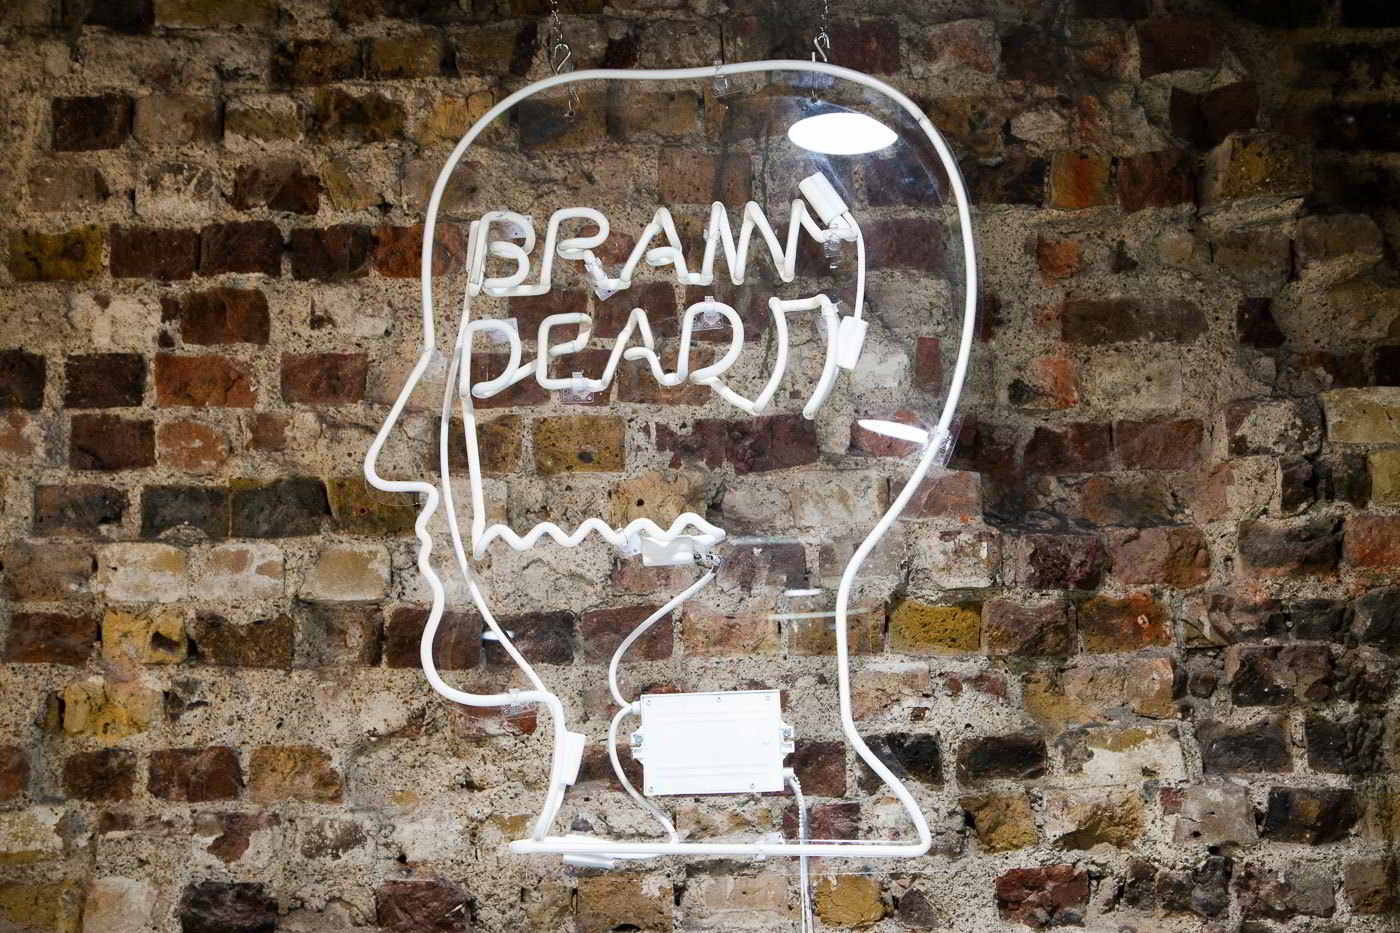 streetwear brasil brain dead dover street market london world update 06 - Brain Dead inaugura pop up com coleção exclusiva em Londres